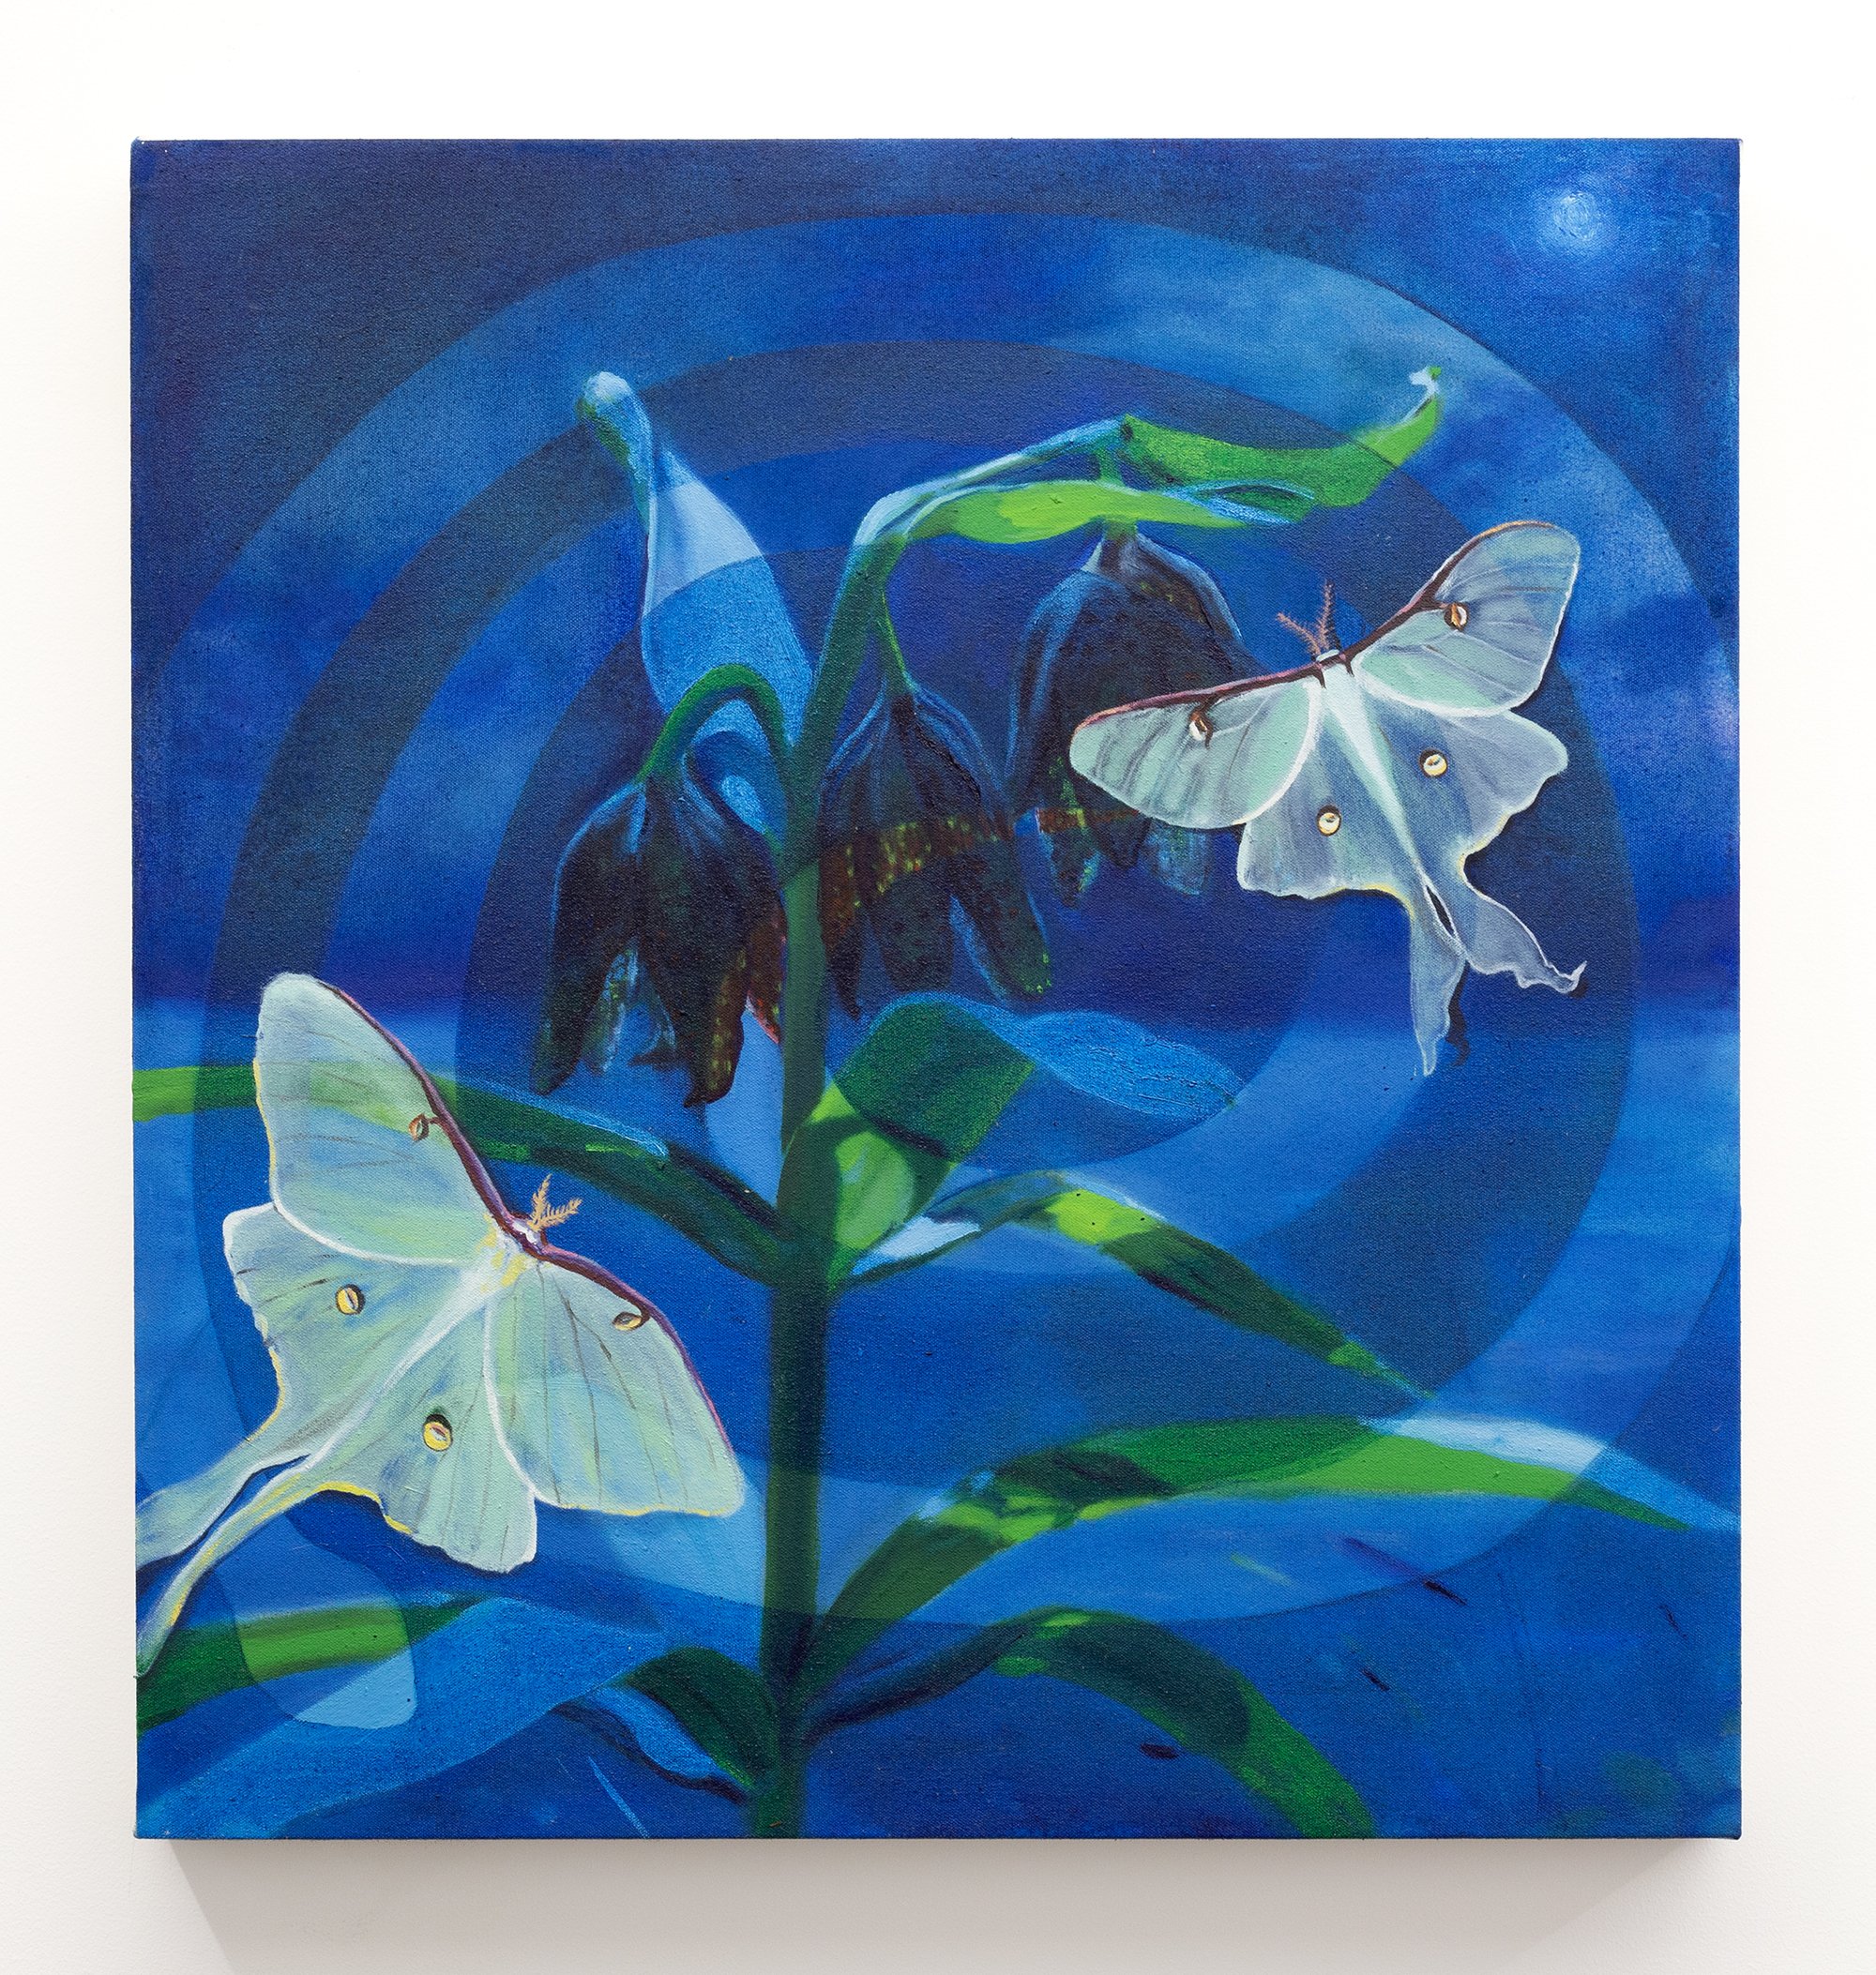 Delaney Lee, Luna Moths, 2022, Oil paint on canvas, 25 x 26.5 inches.